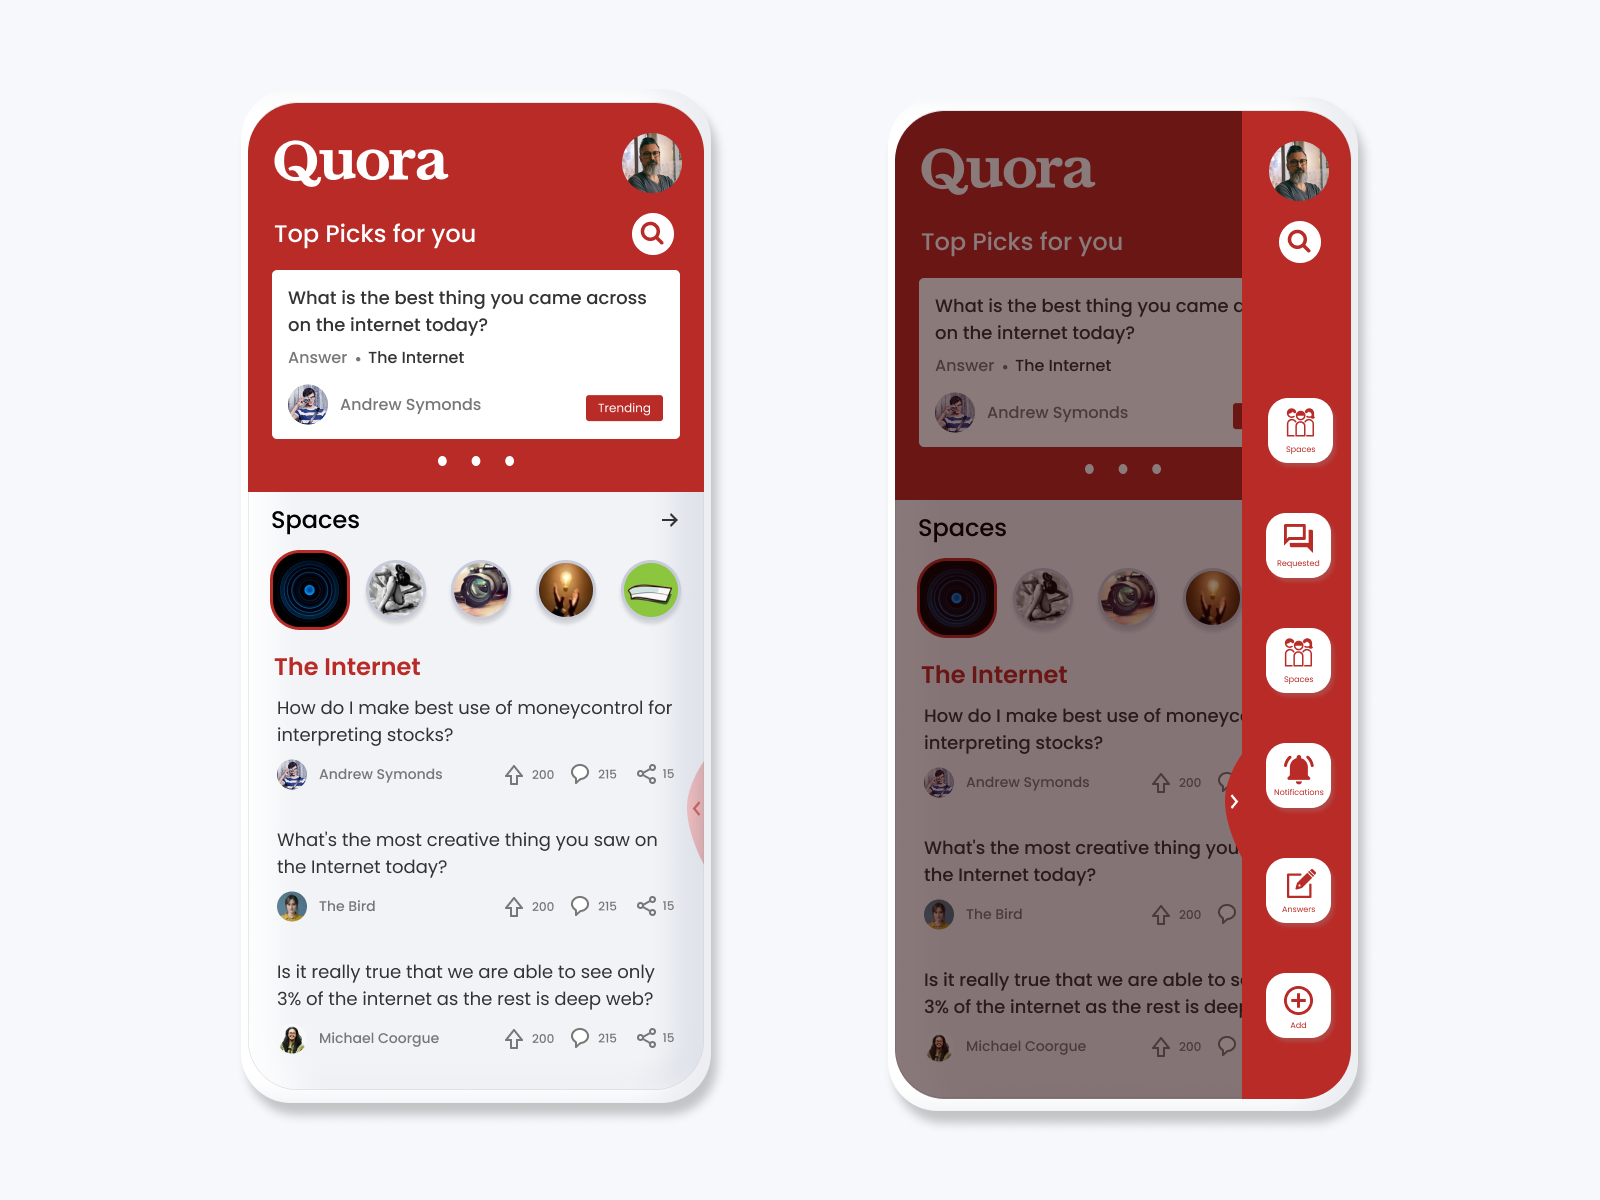 Quora App Redesign concept by Muajeez Aafaque on Dribbble